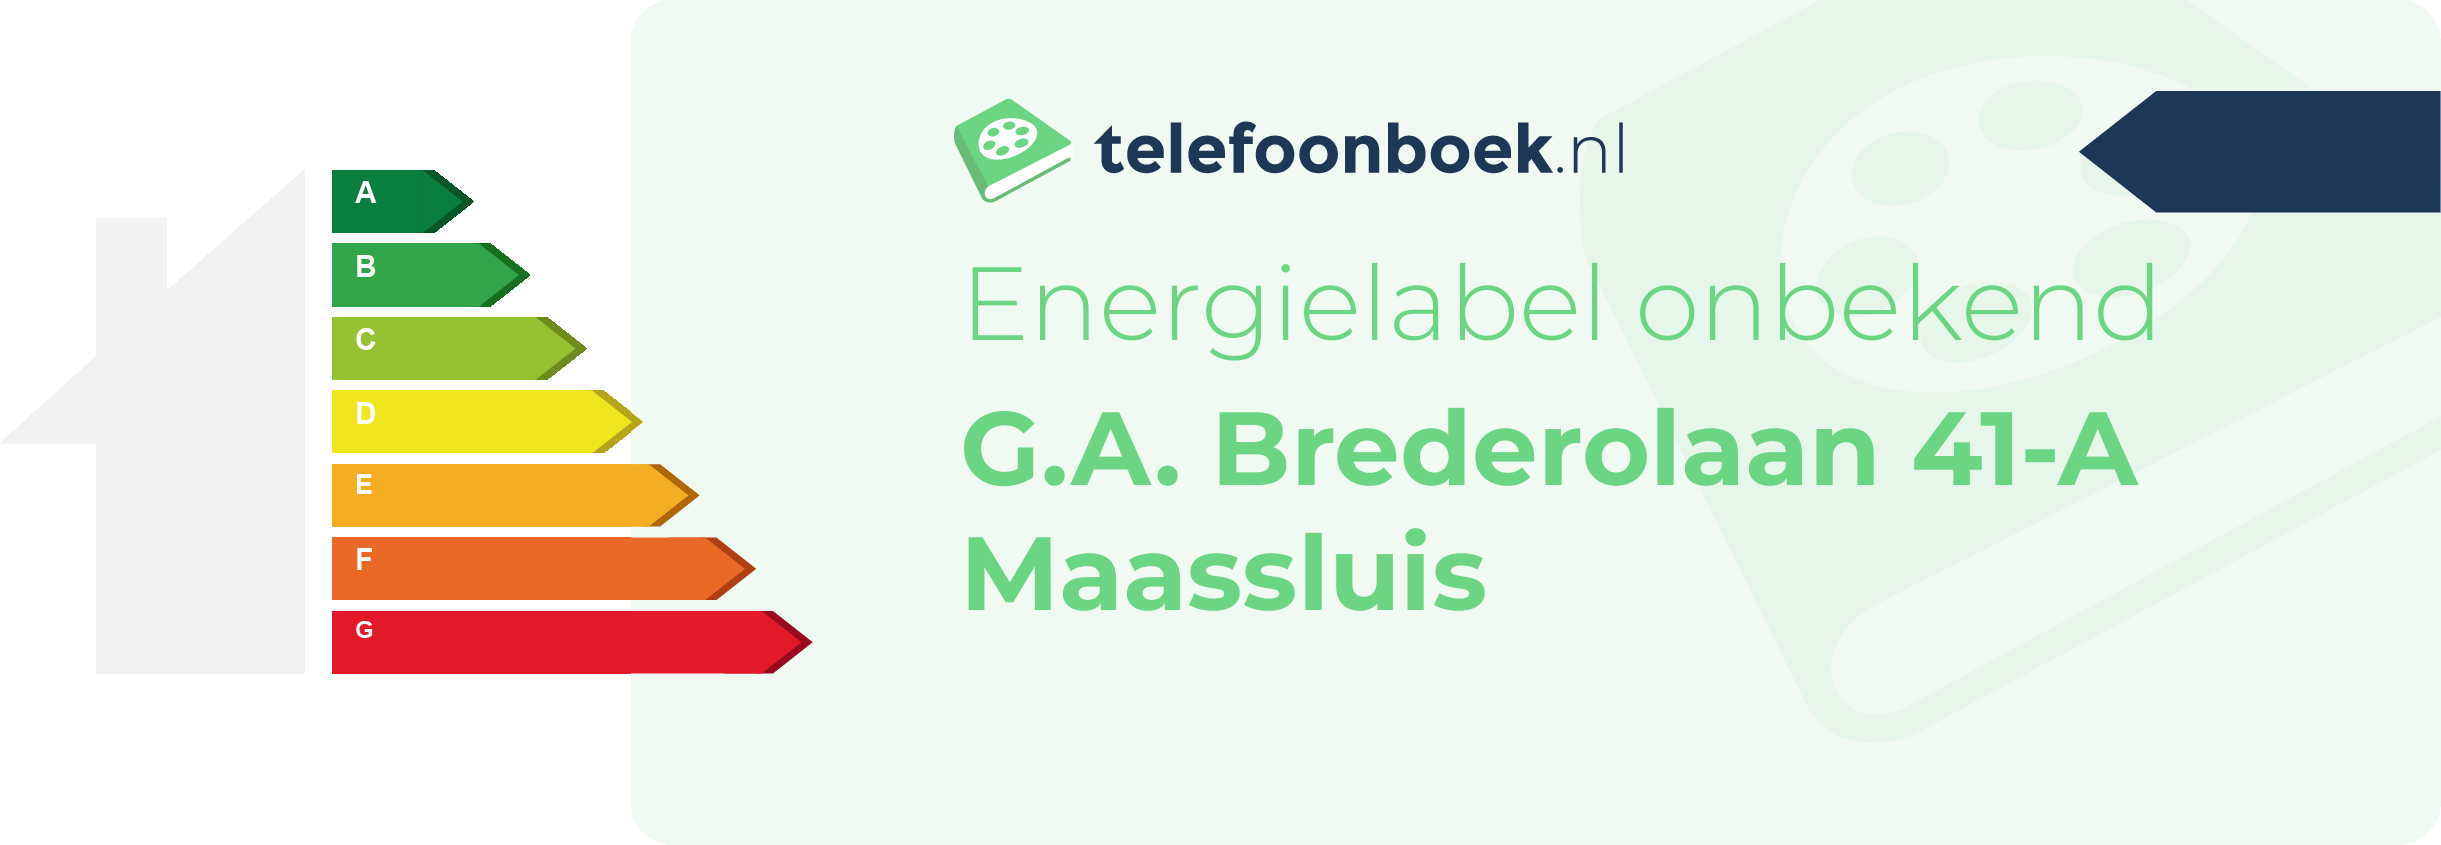 Energielabel G.A. Brederolaan 41-A Maassluis